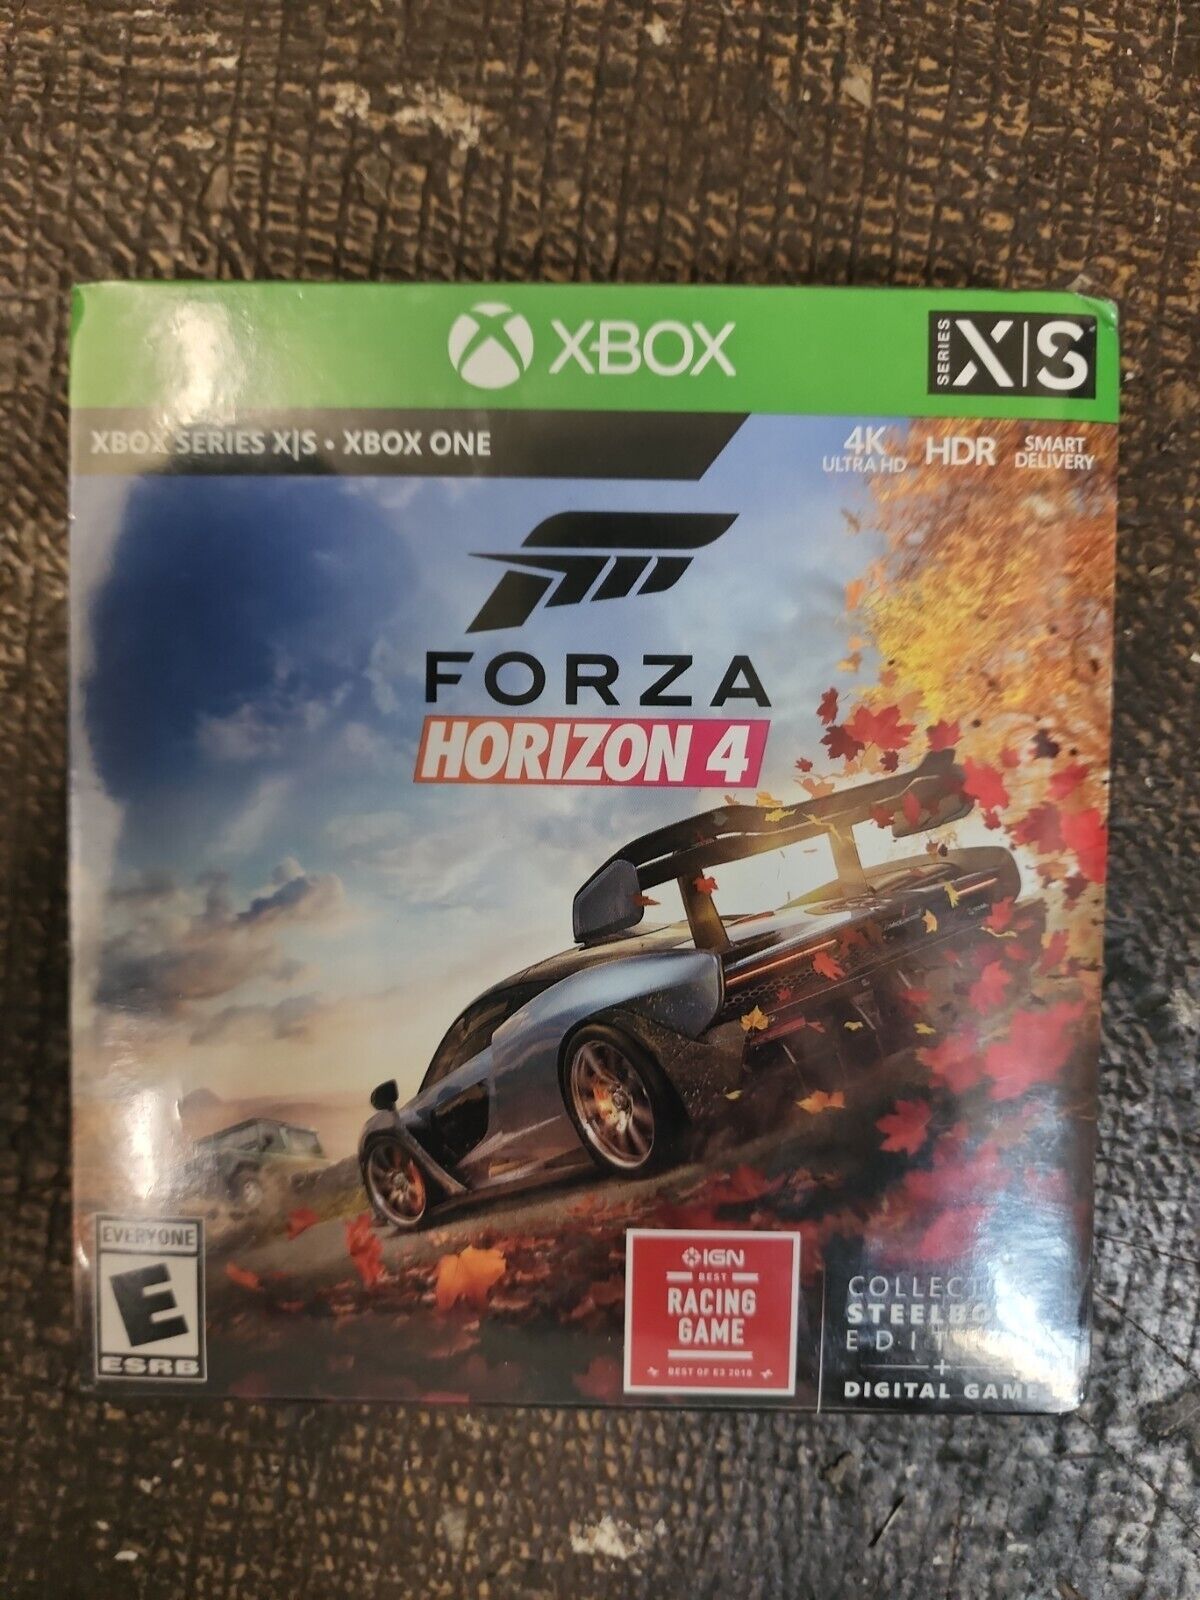 Theseus terrorisme Belastingbetaler Forza Horizon 4 - Xbox One X/S Collectors steelbook edition + digital game  889842392357 | eBay